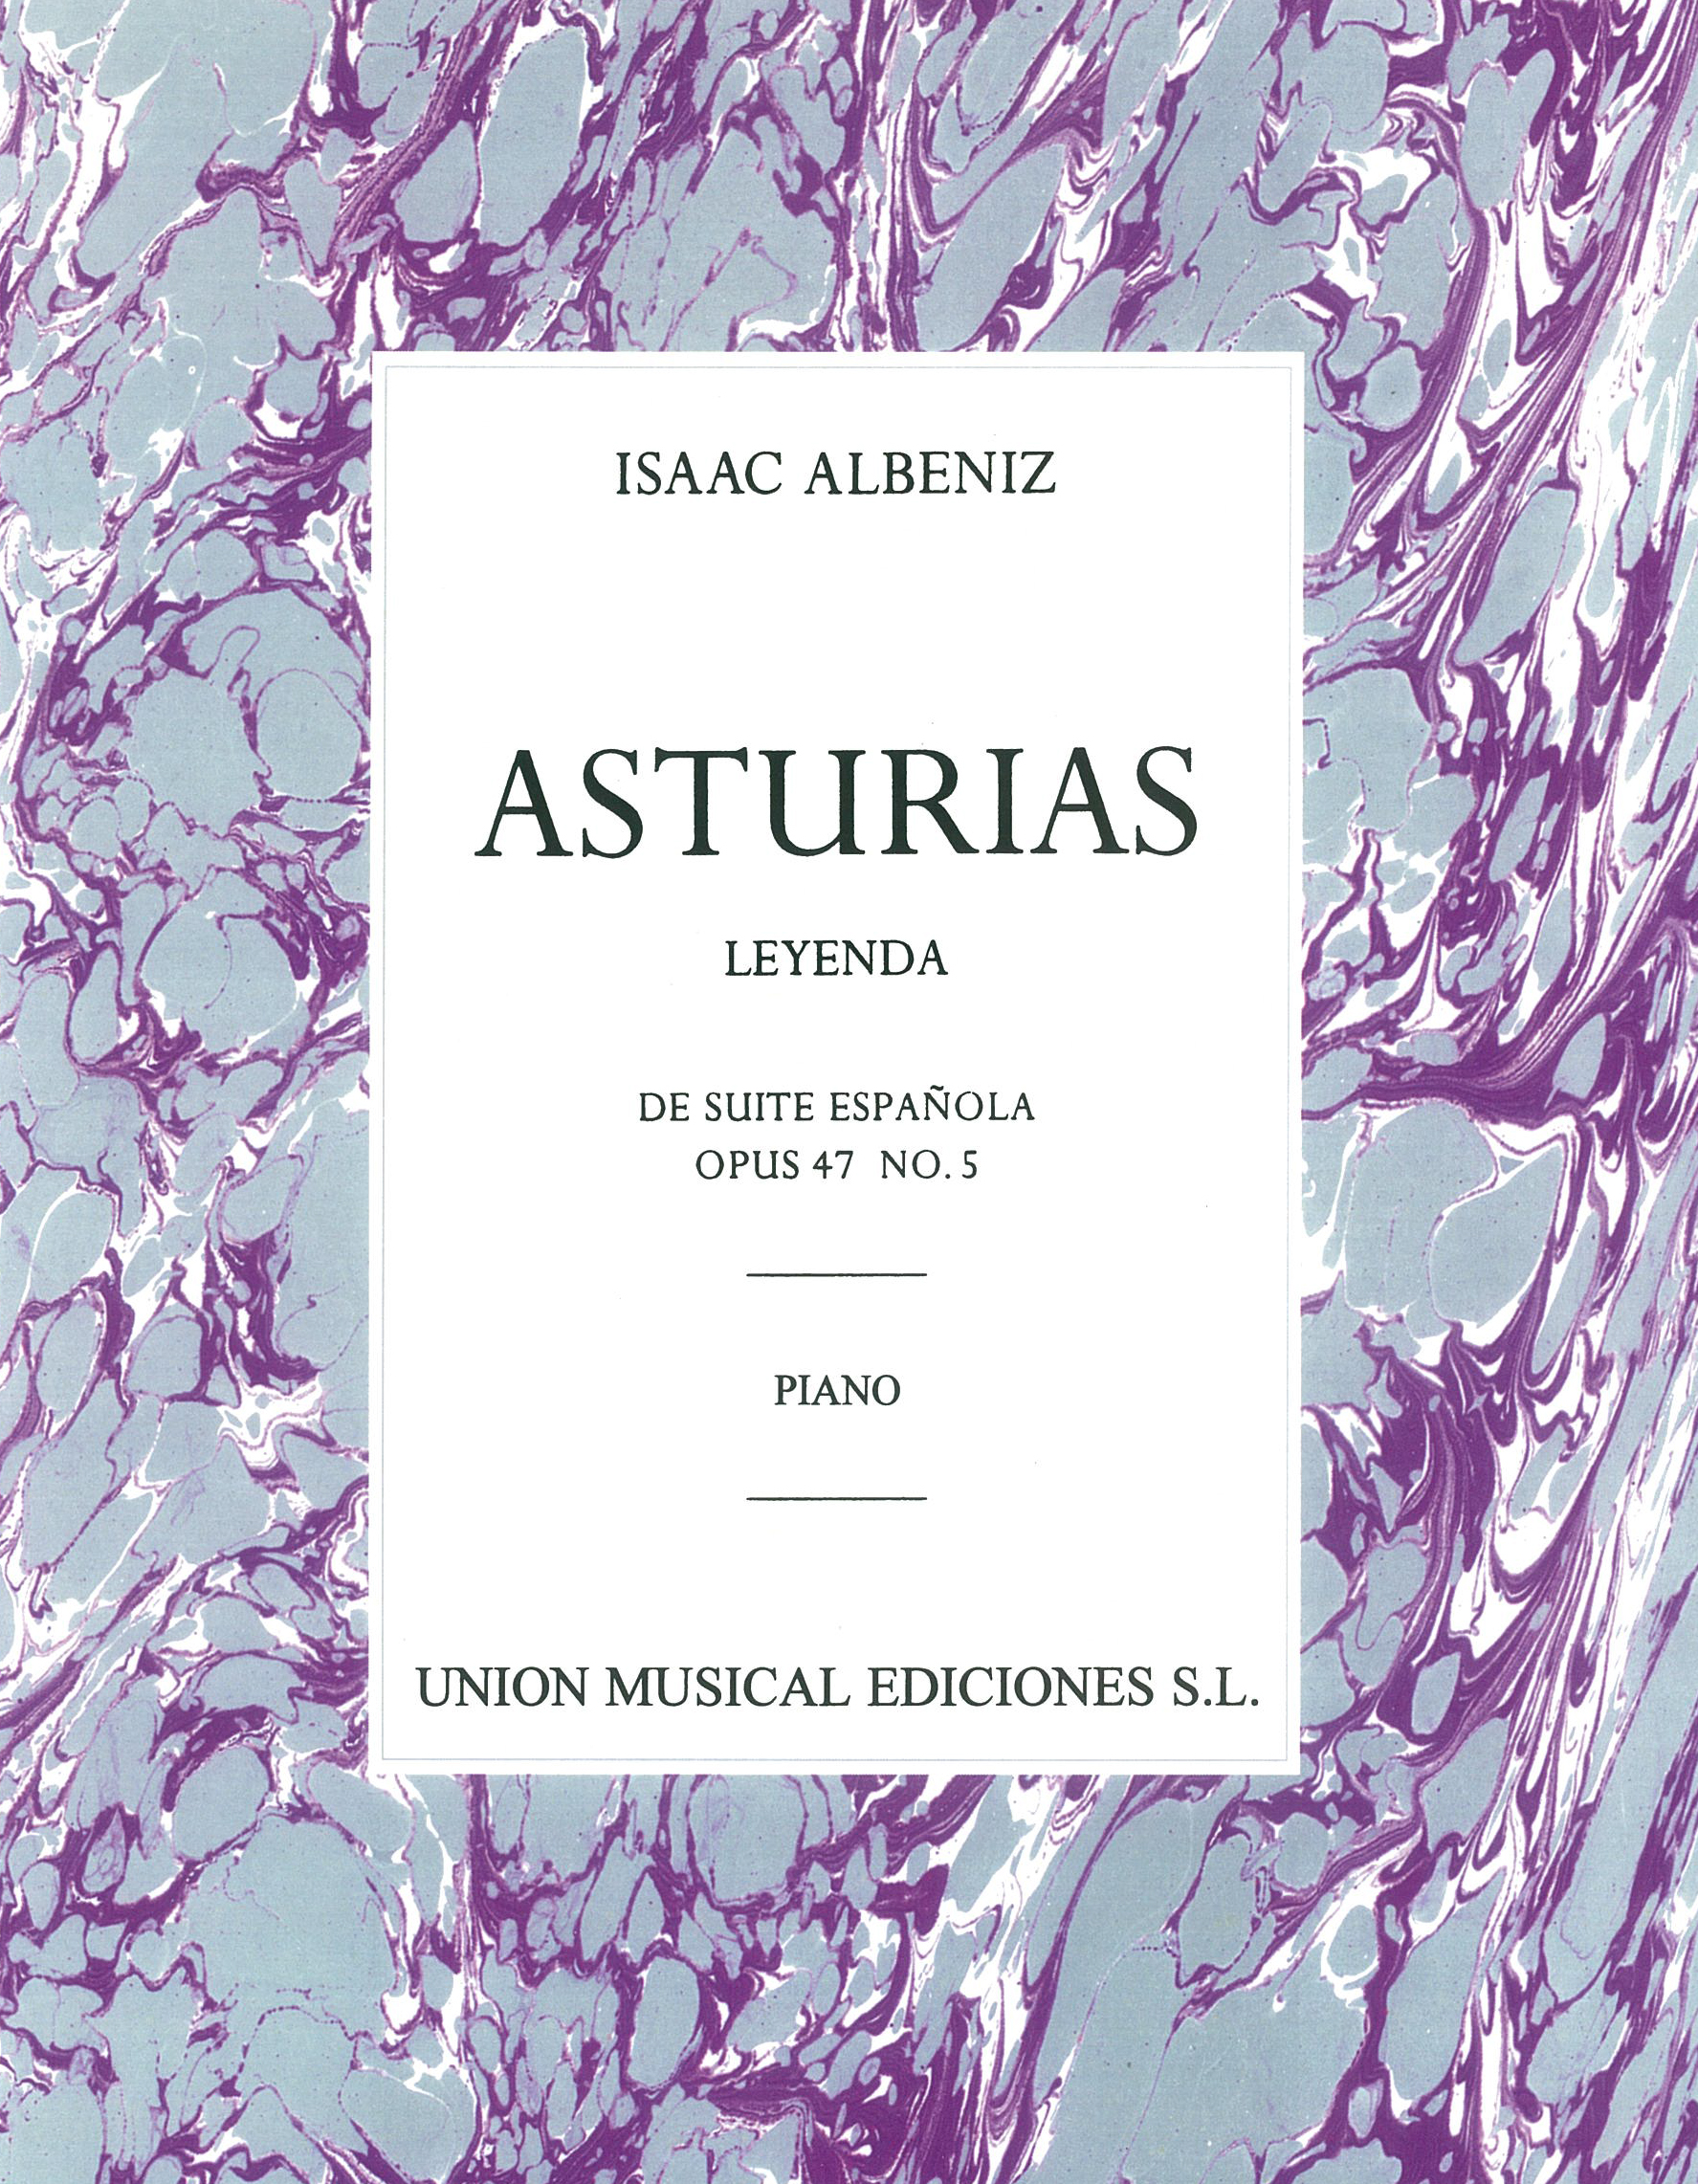 Isaac Albniz: Asturias (leyenda) De Suite Espanola Op.47 No.5: Piano: